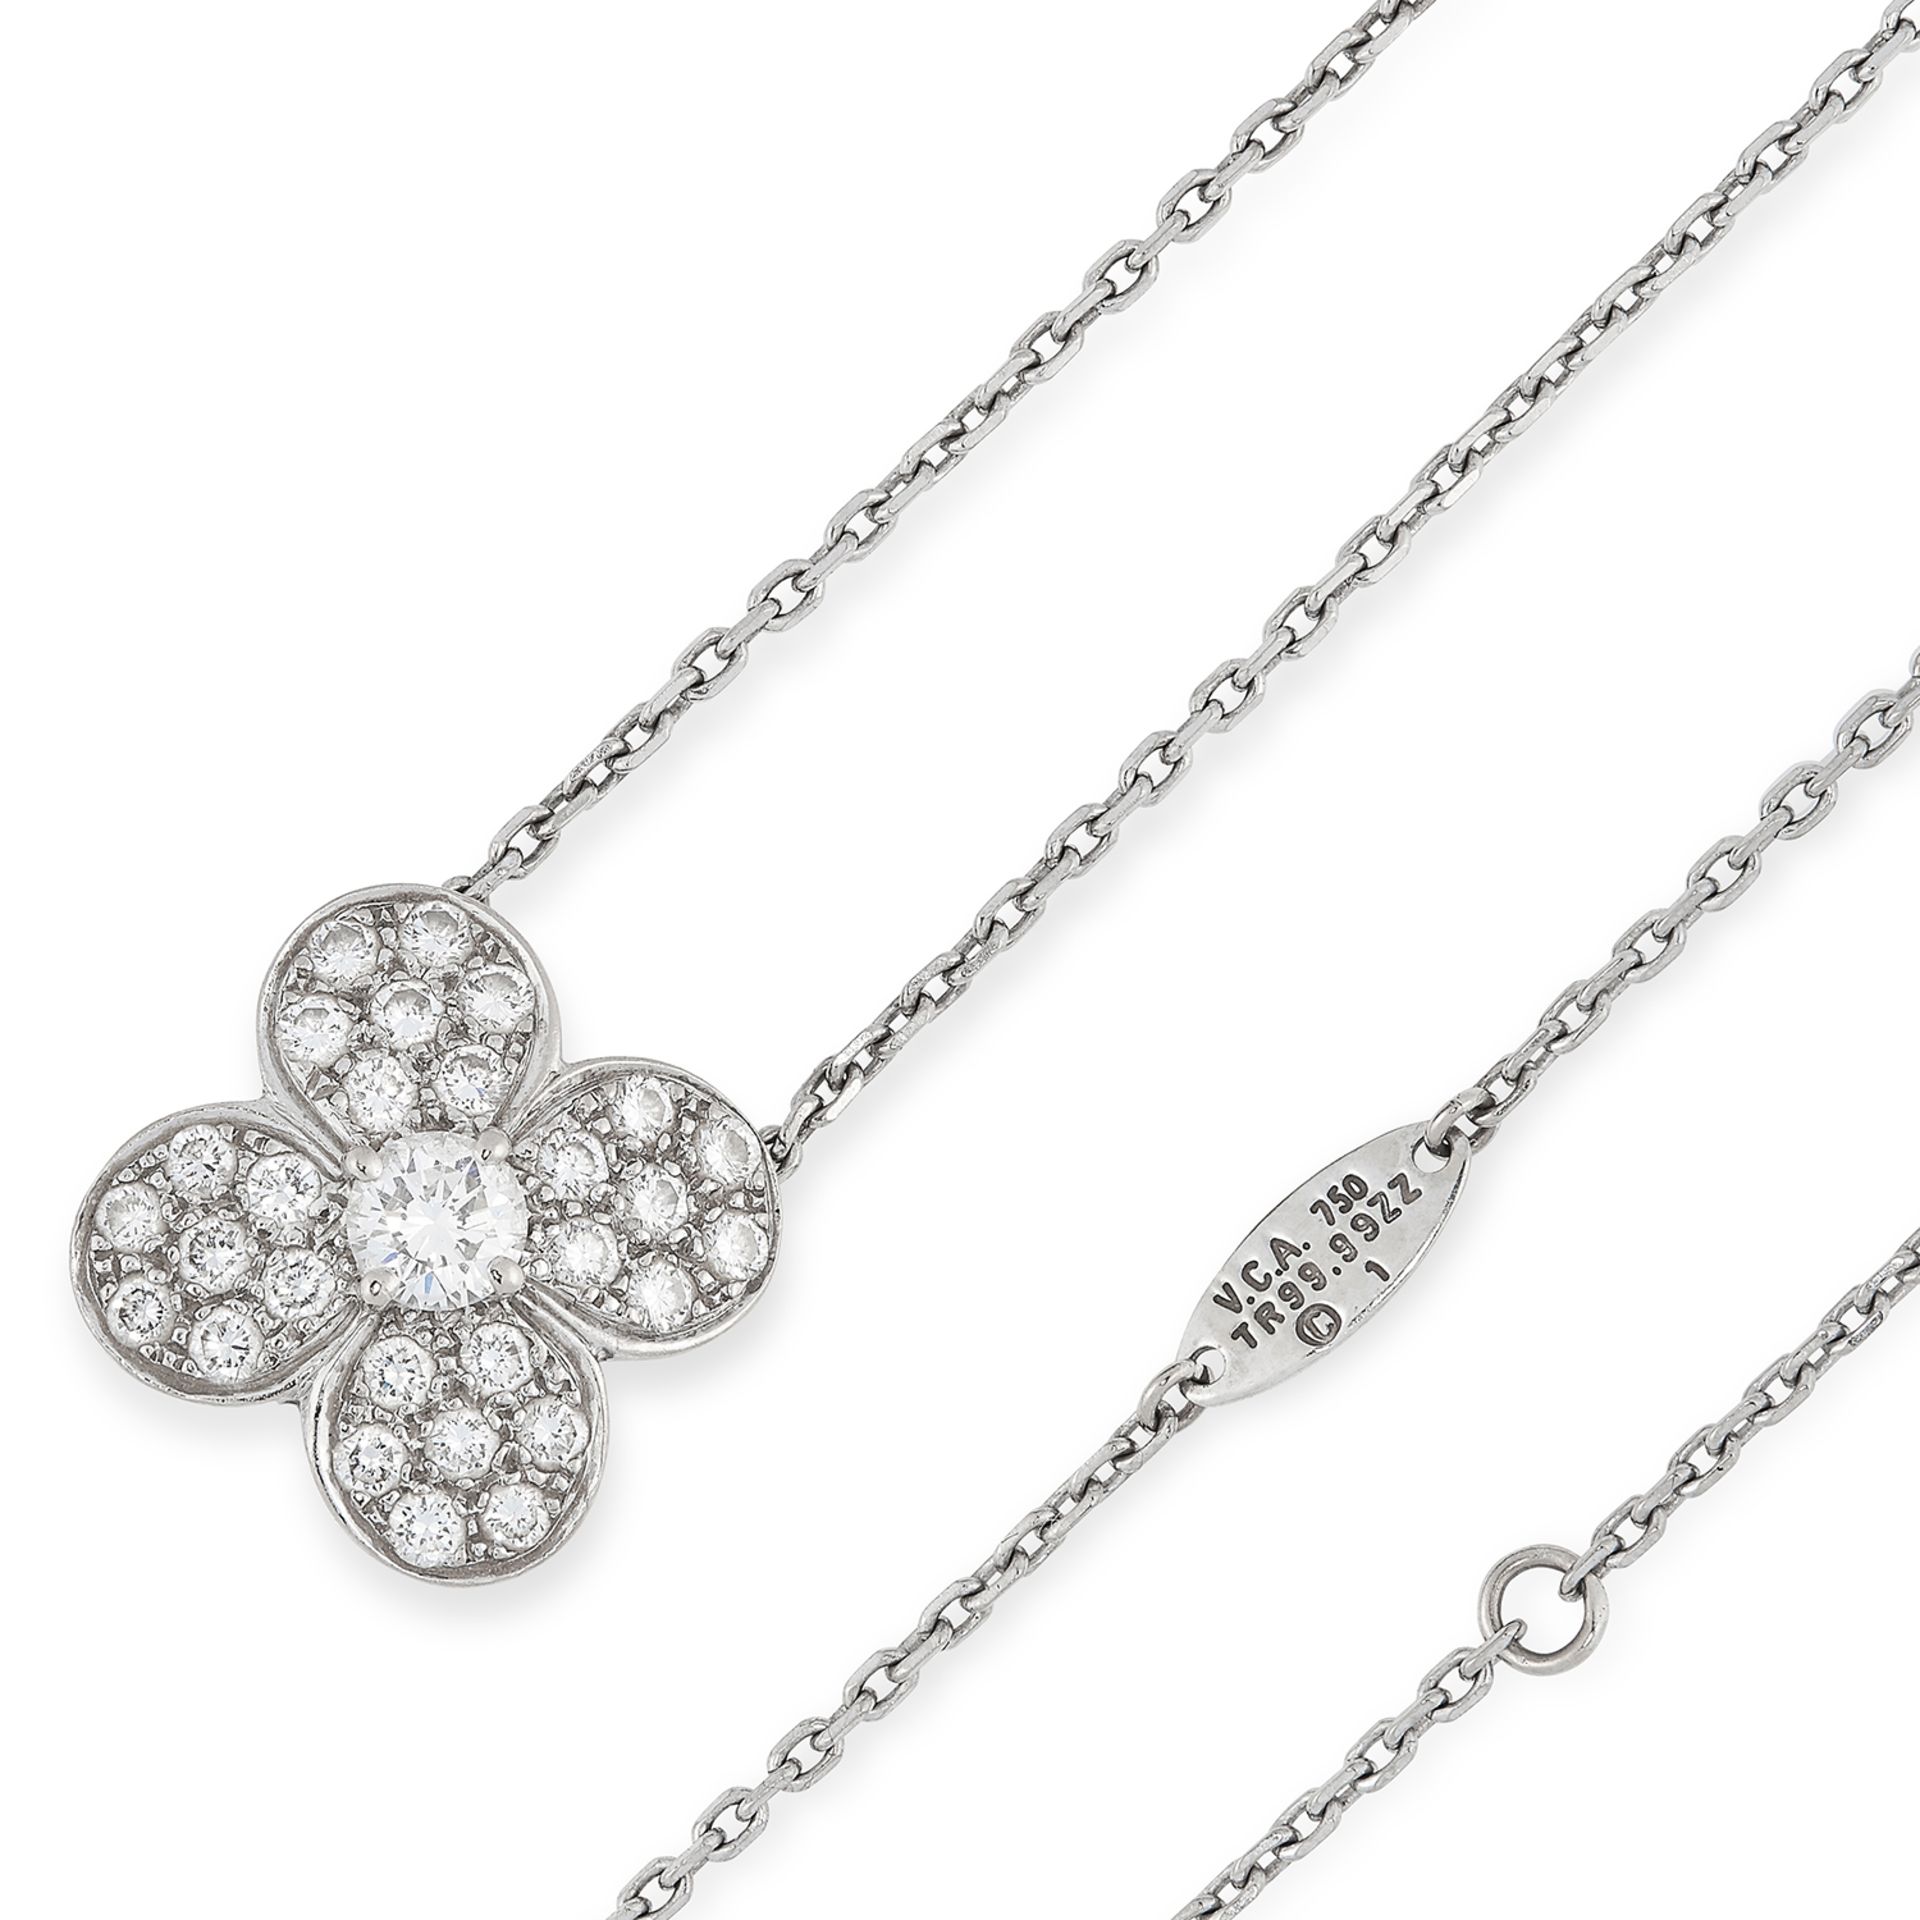 A DIAMOND TREFLE NECKLACE, VAN CLEEF & ARPELS the quatrefoil flower motif set with a central round